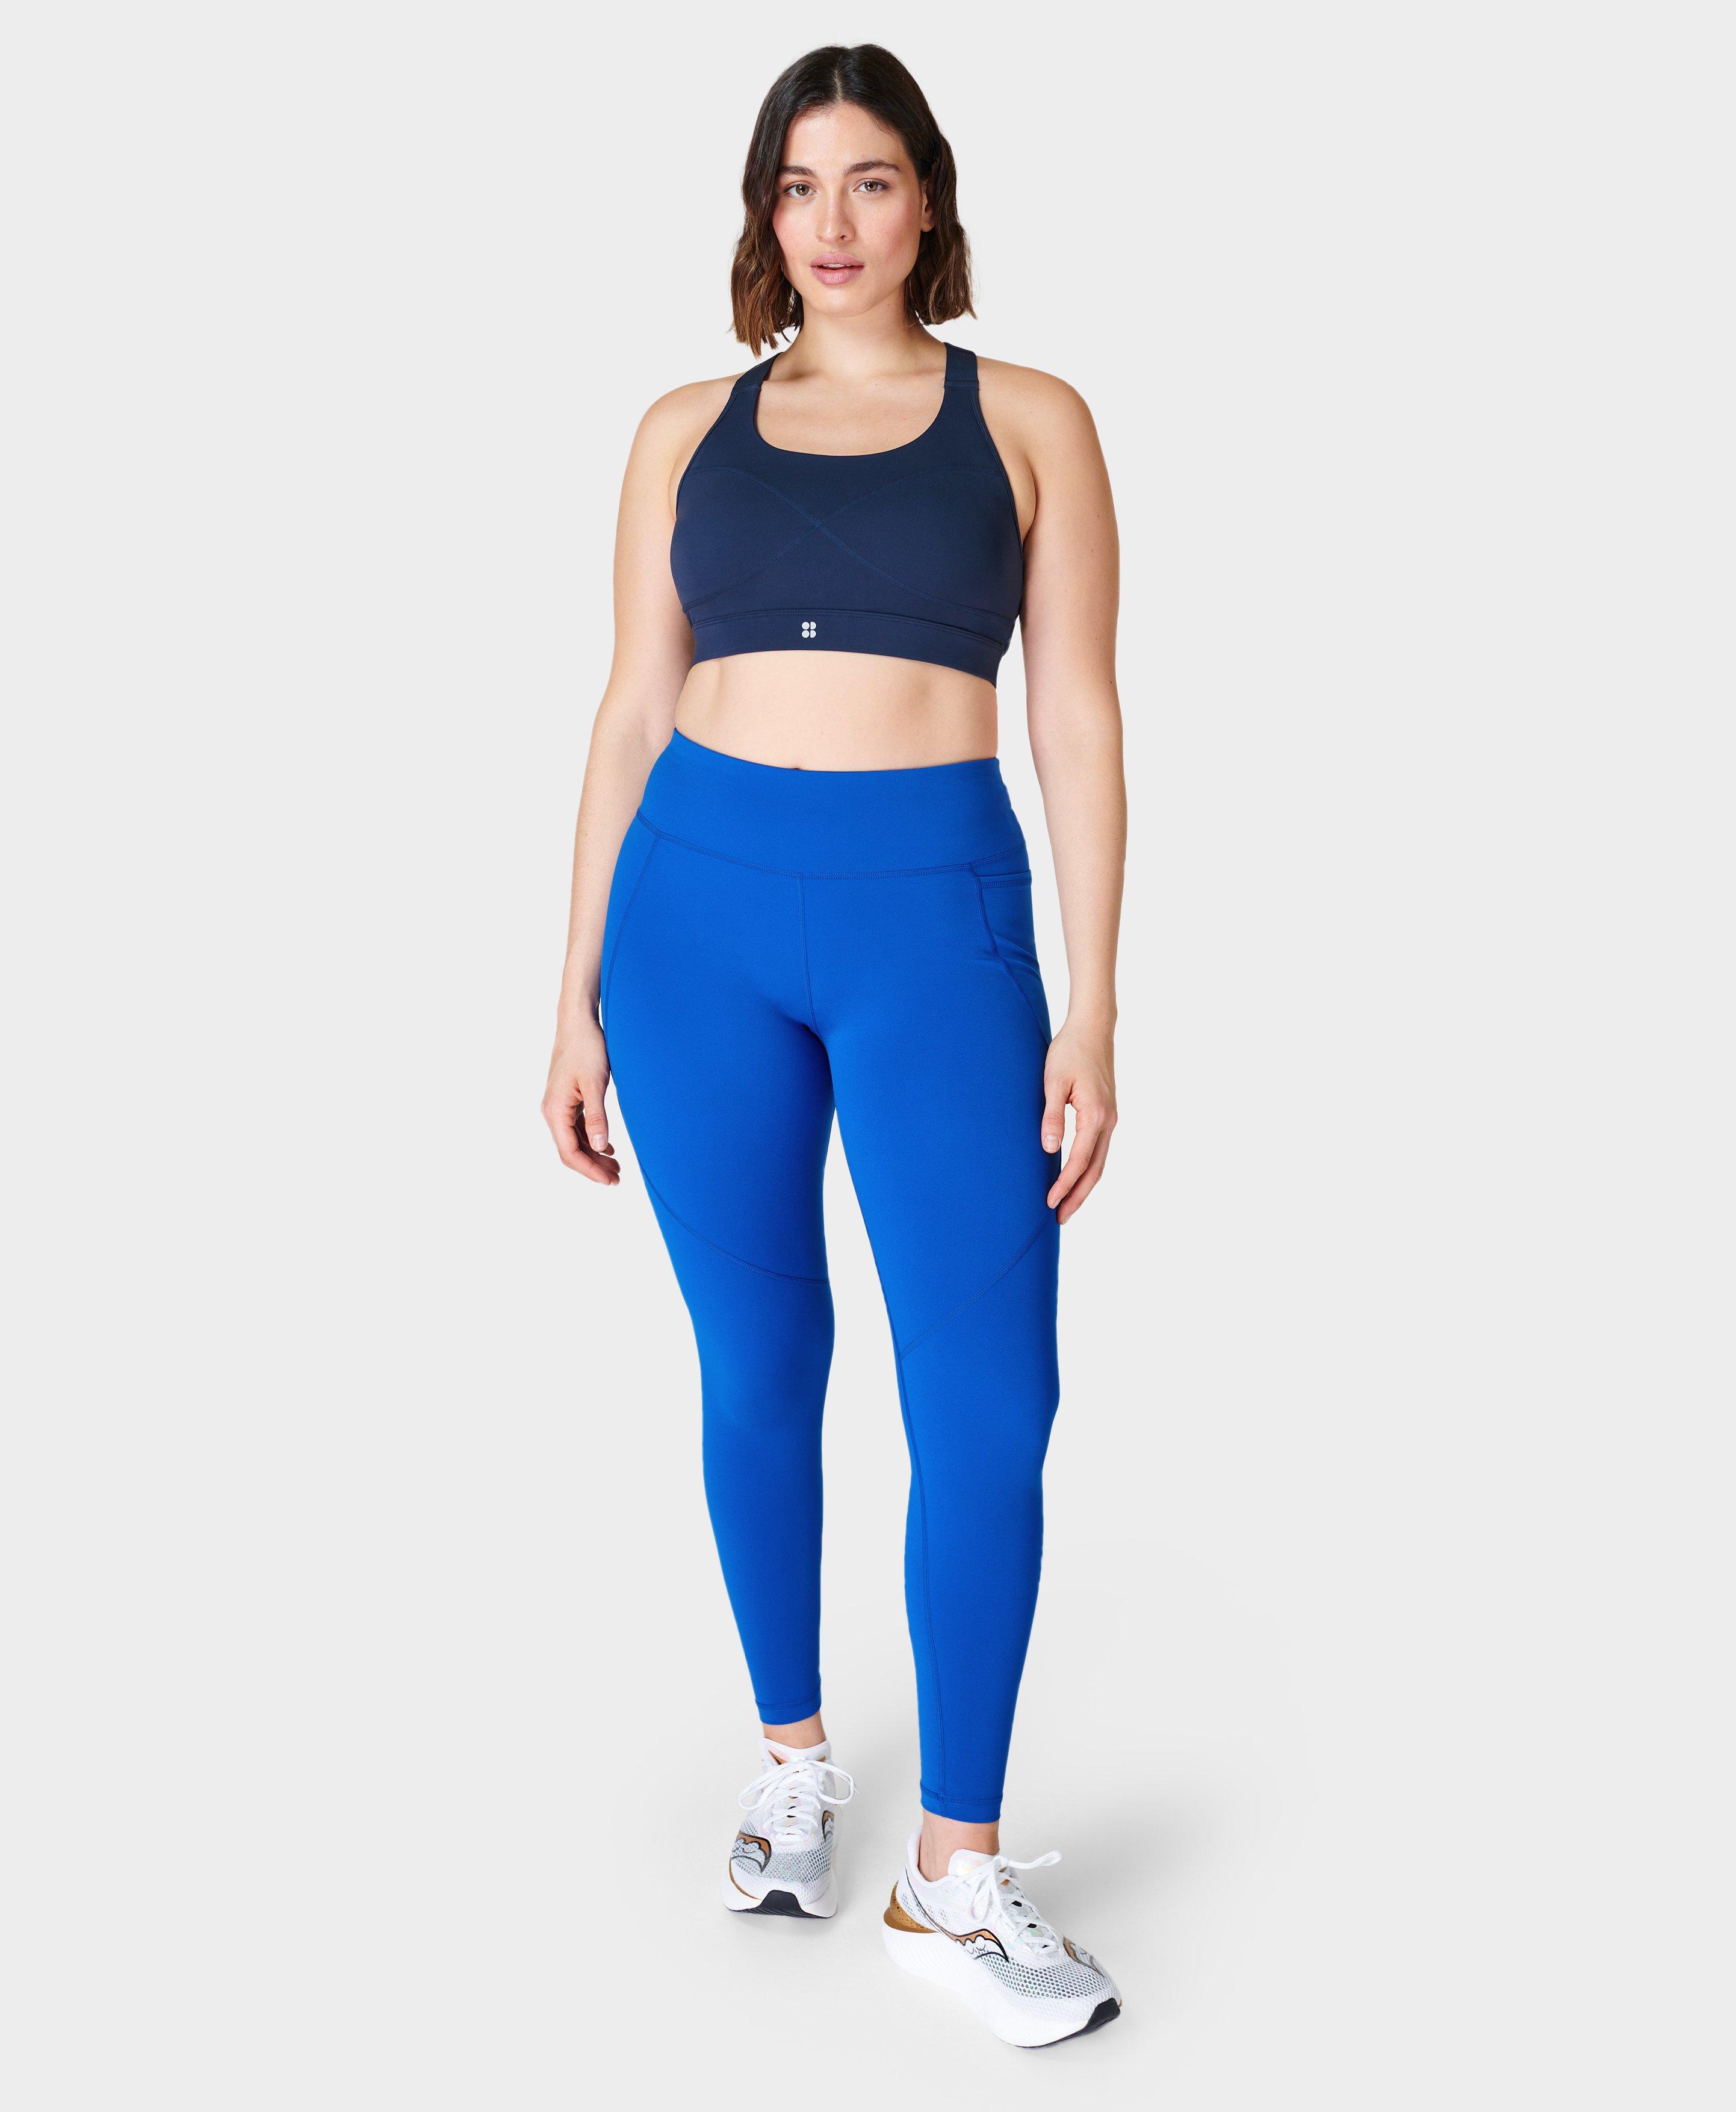 💖 Crivit Fitness Ladies Sports Bra Natural Evolution Blue Size S, M, L New  💖 – ASA College: Florida